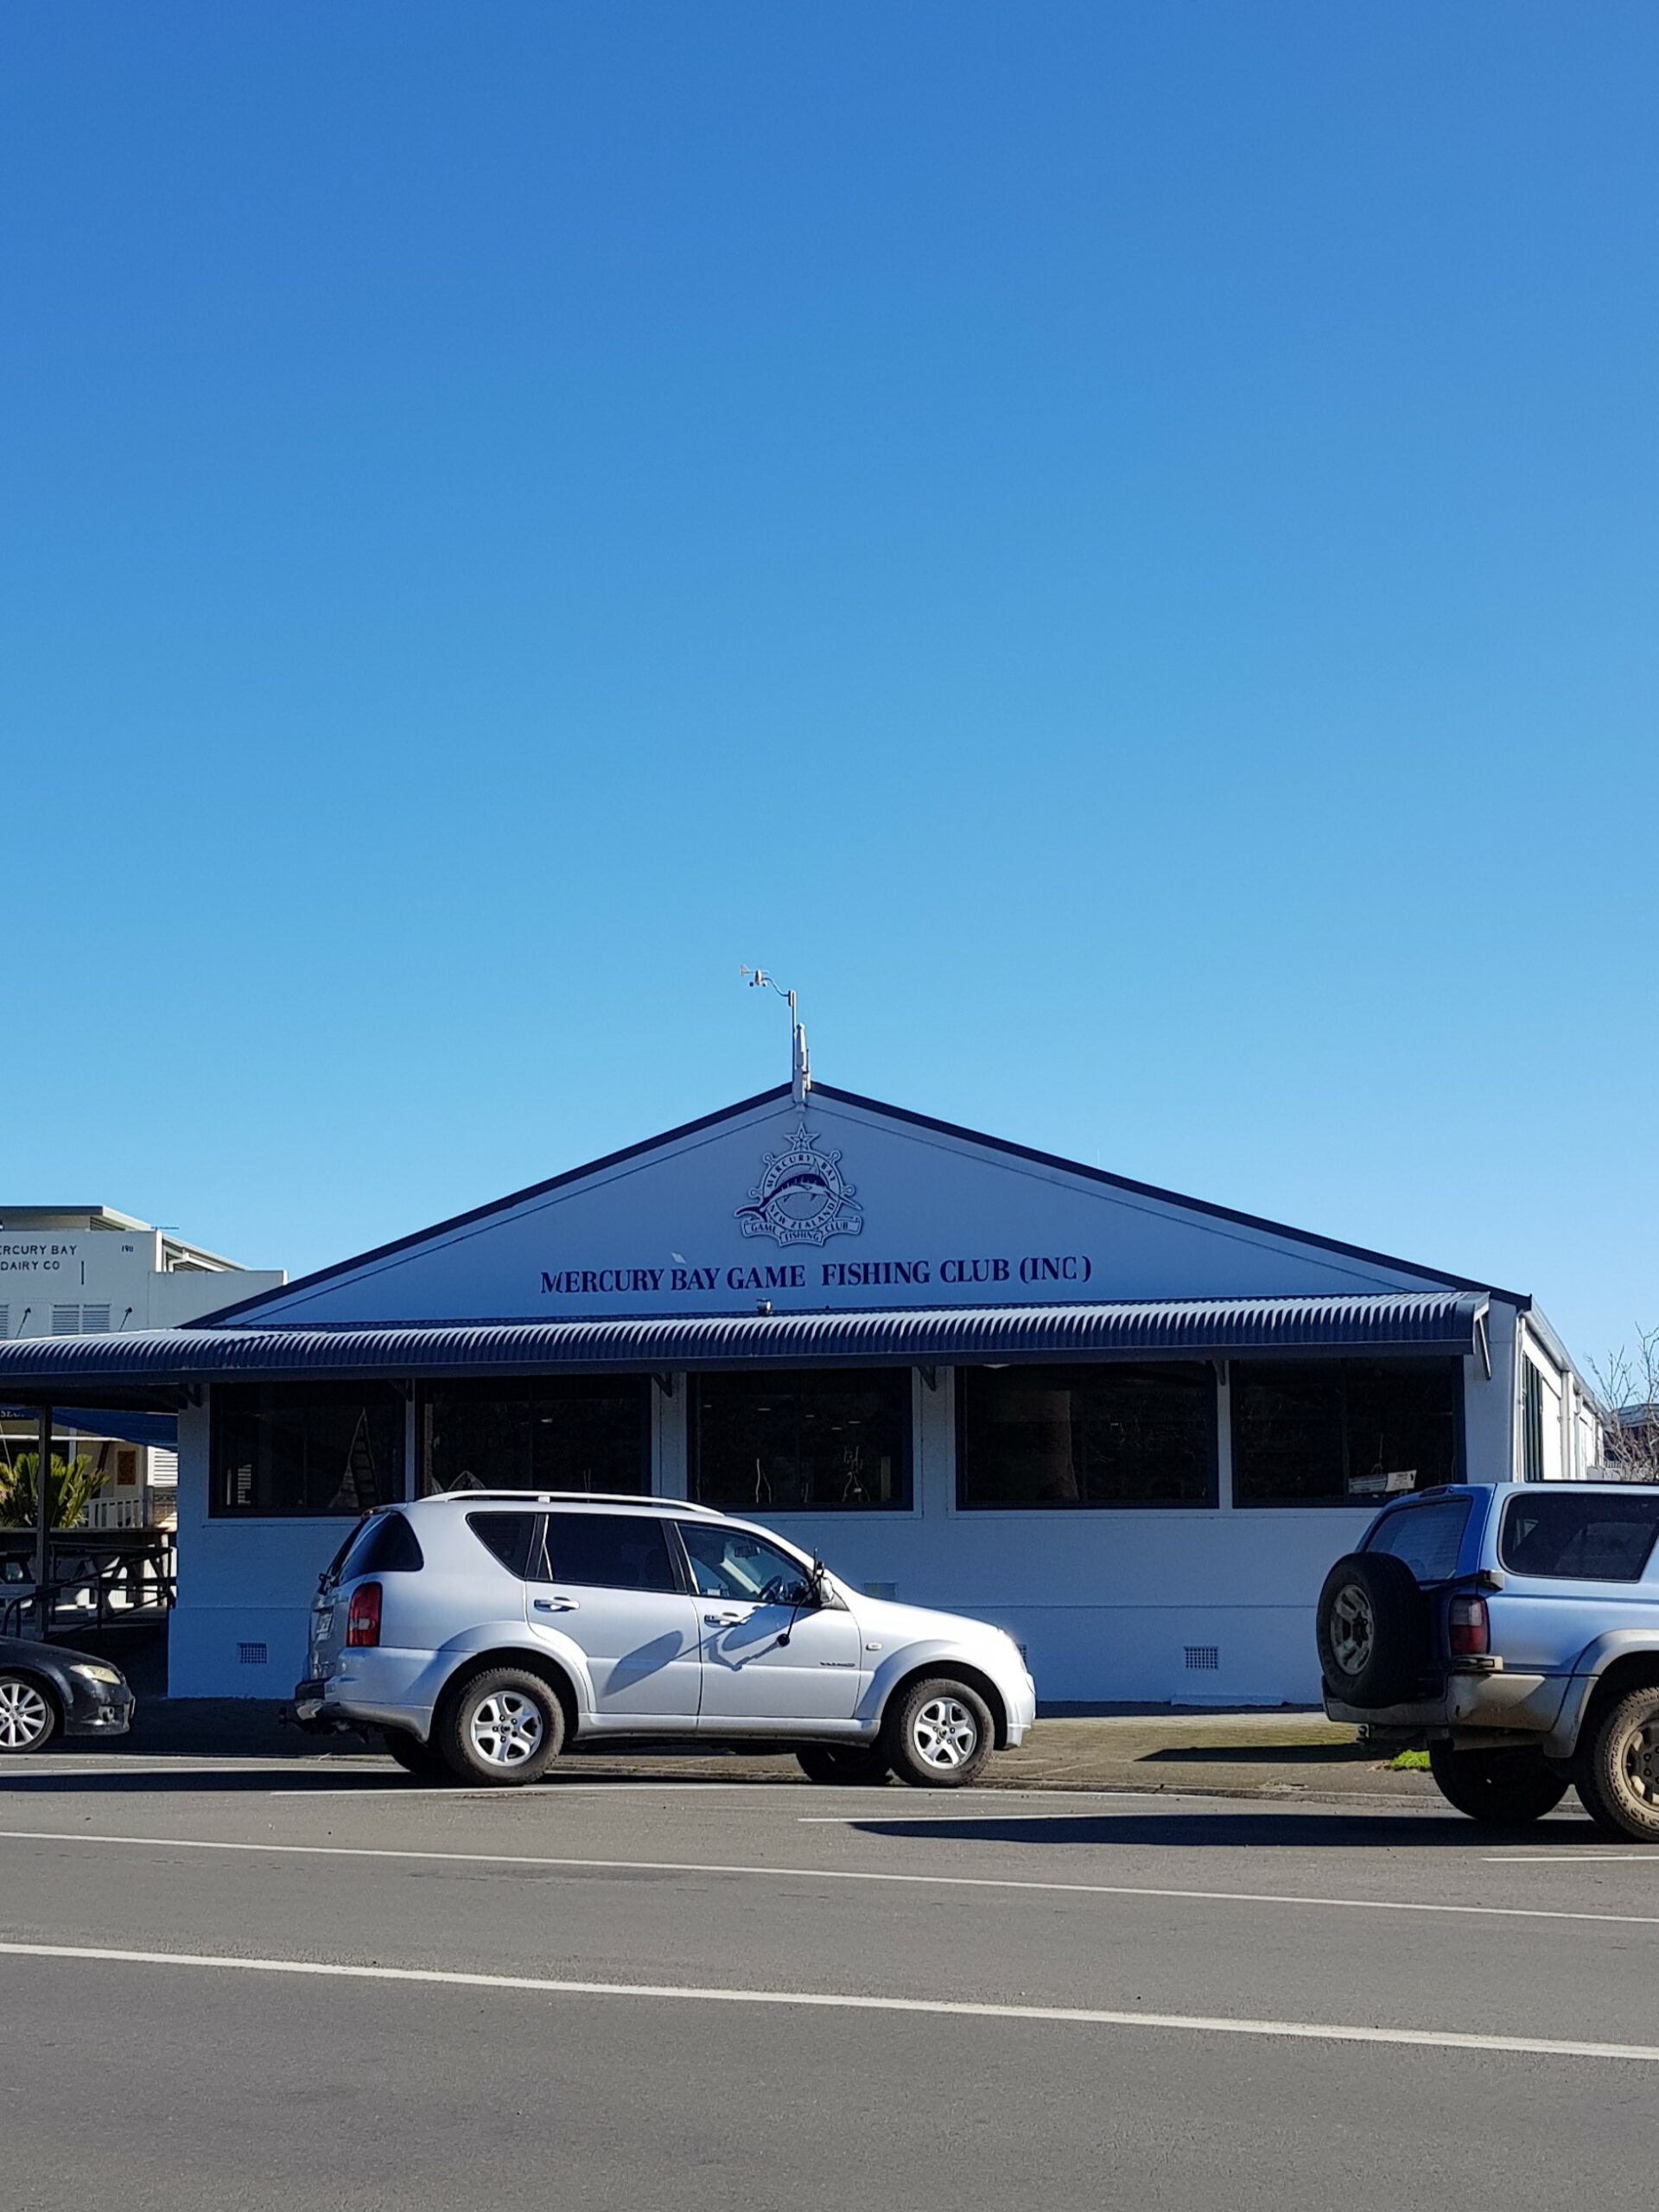 The Mercury Bay Game Fishing Club Building